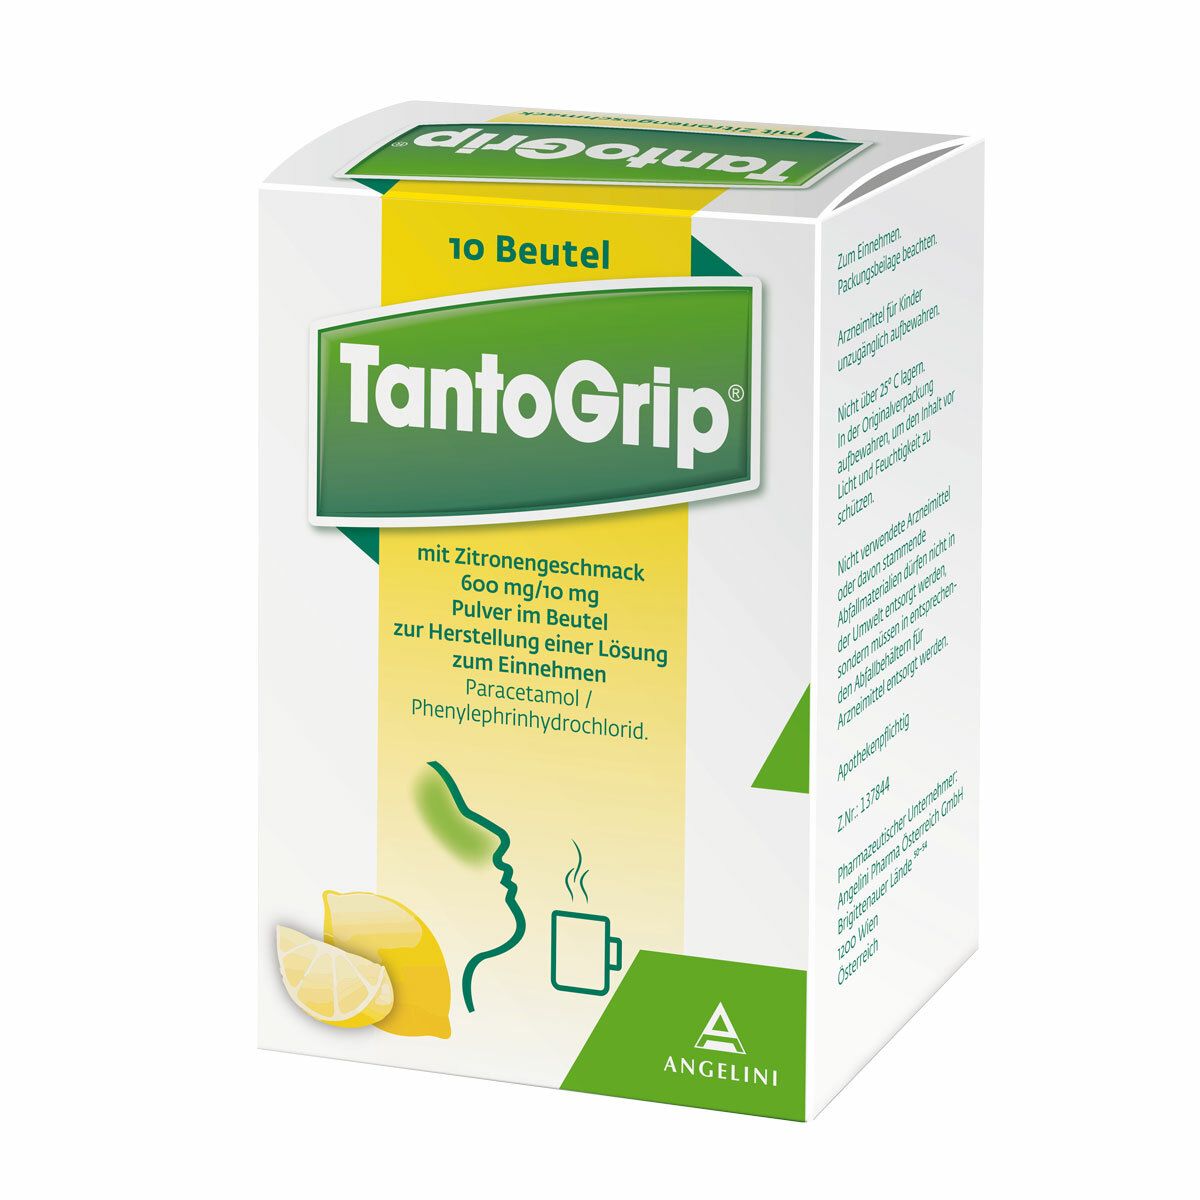 TantoGrip® mit Zitronengeschmack